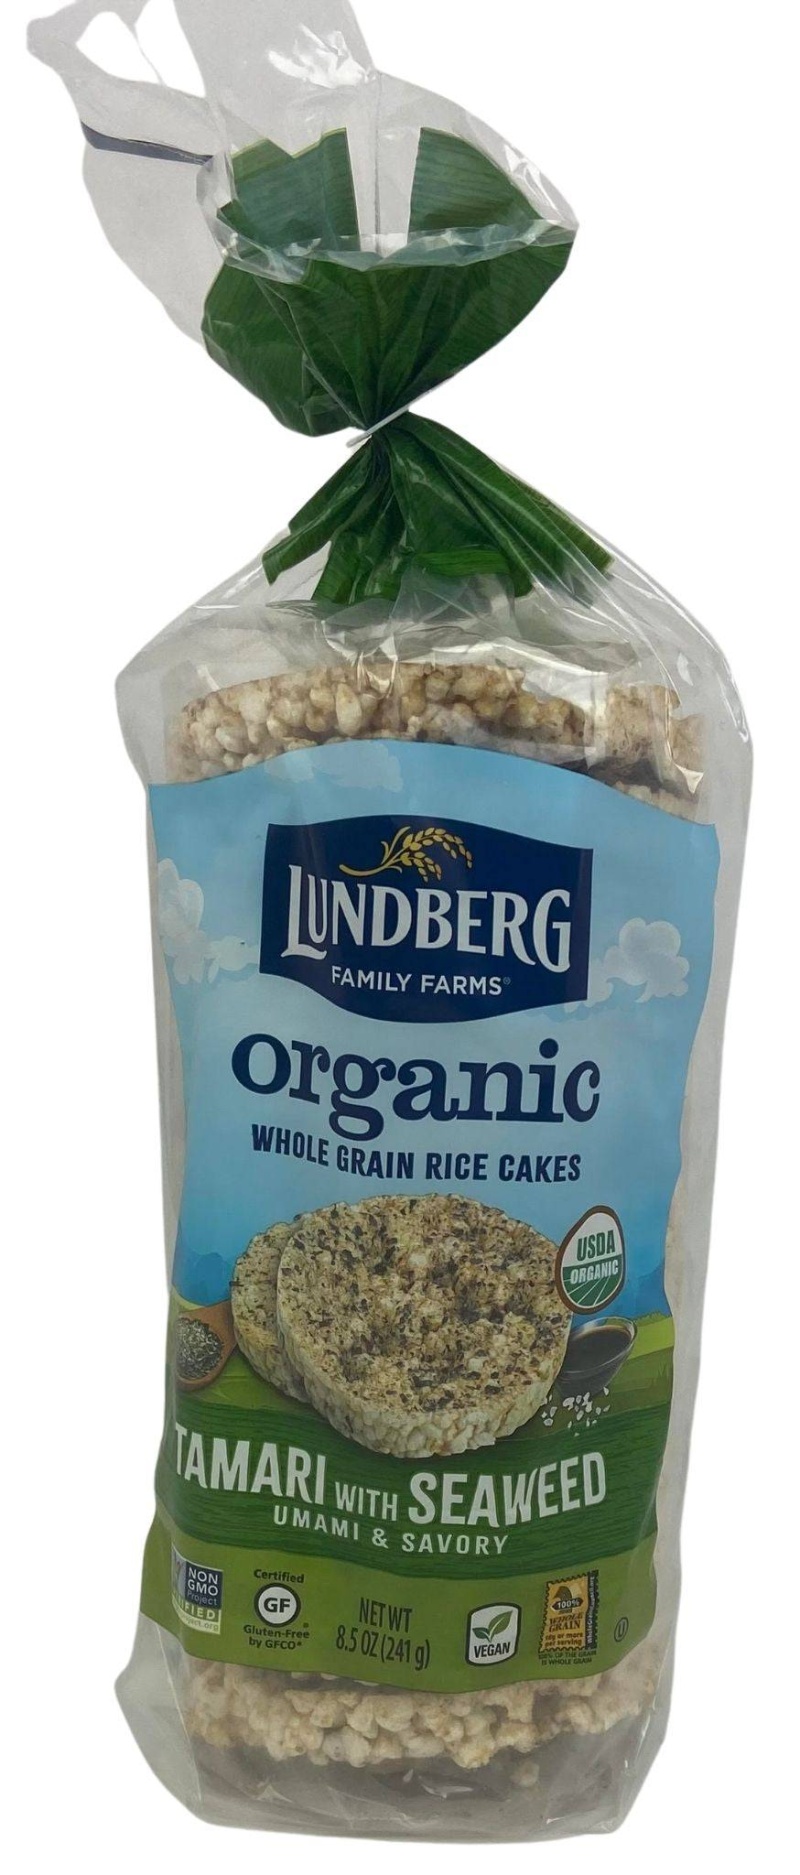 Lundberg Organic Whole Grain Rice Cakes